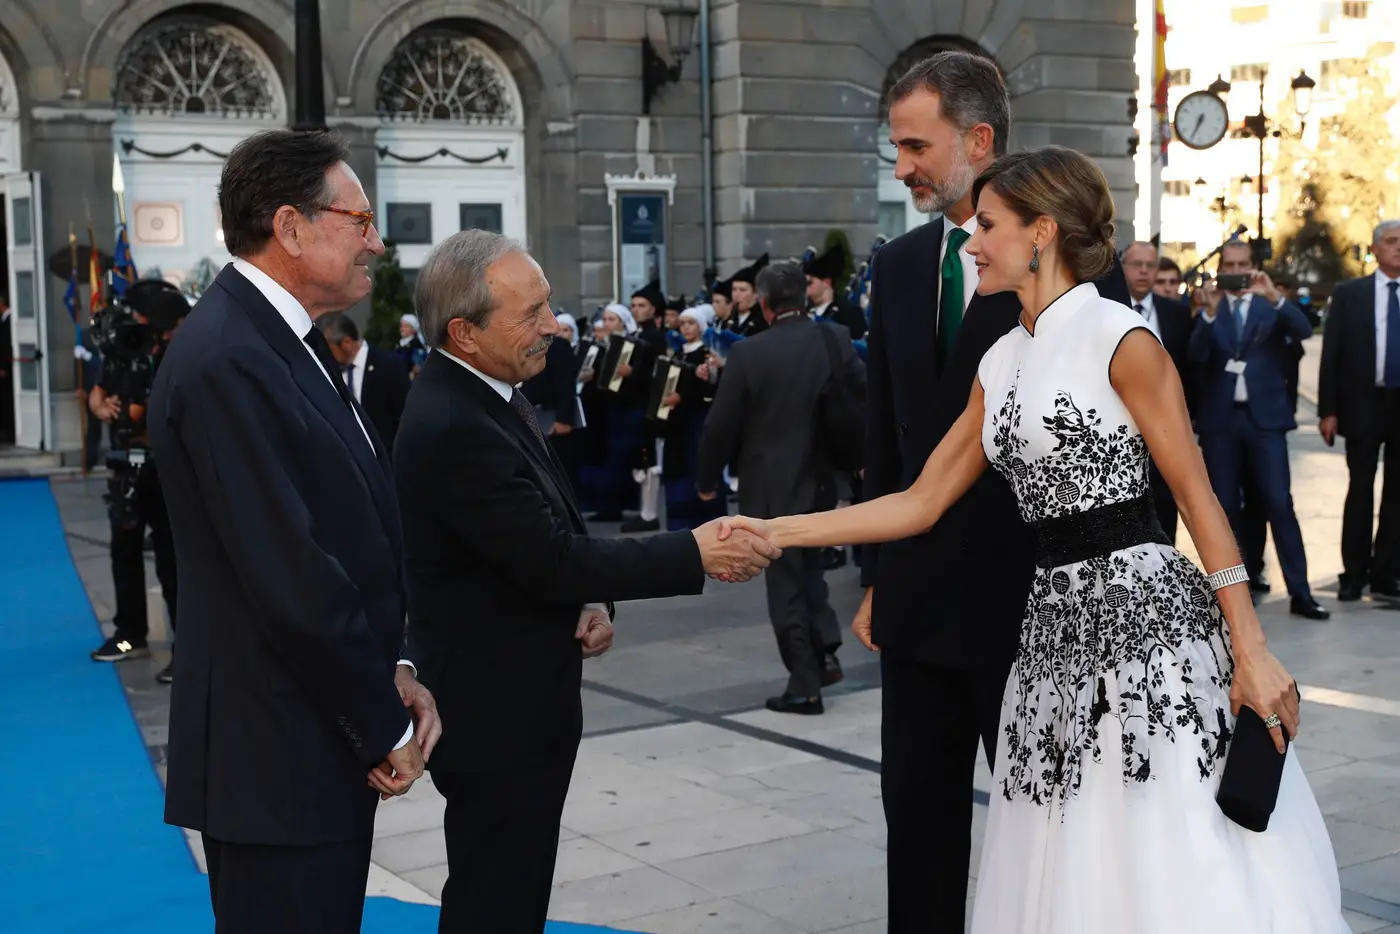 Queen Letizia of Spain wore White and black Felipe Varela dress at the 2017 Princess of Asturias Awards